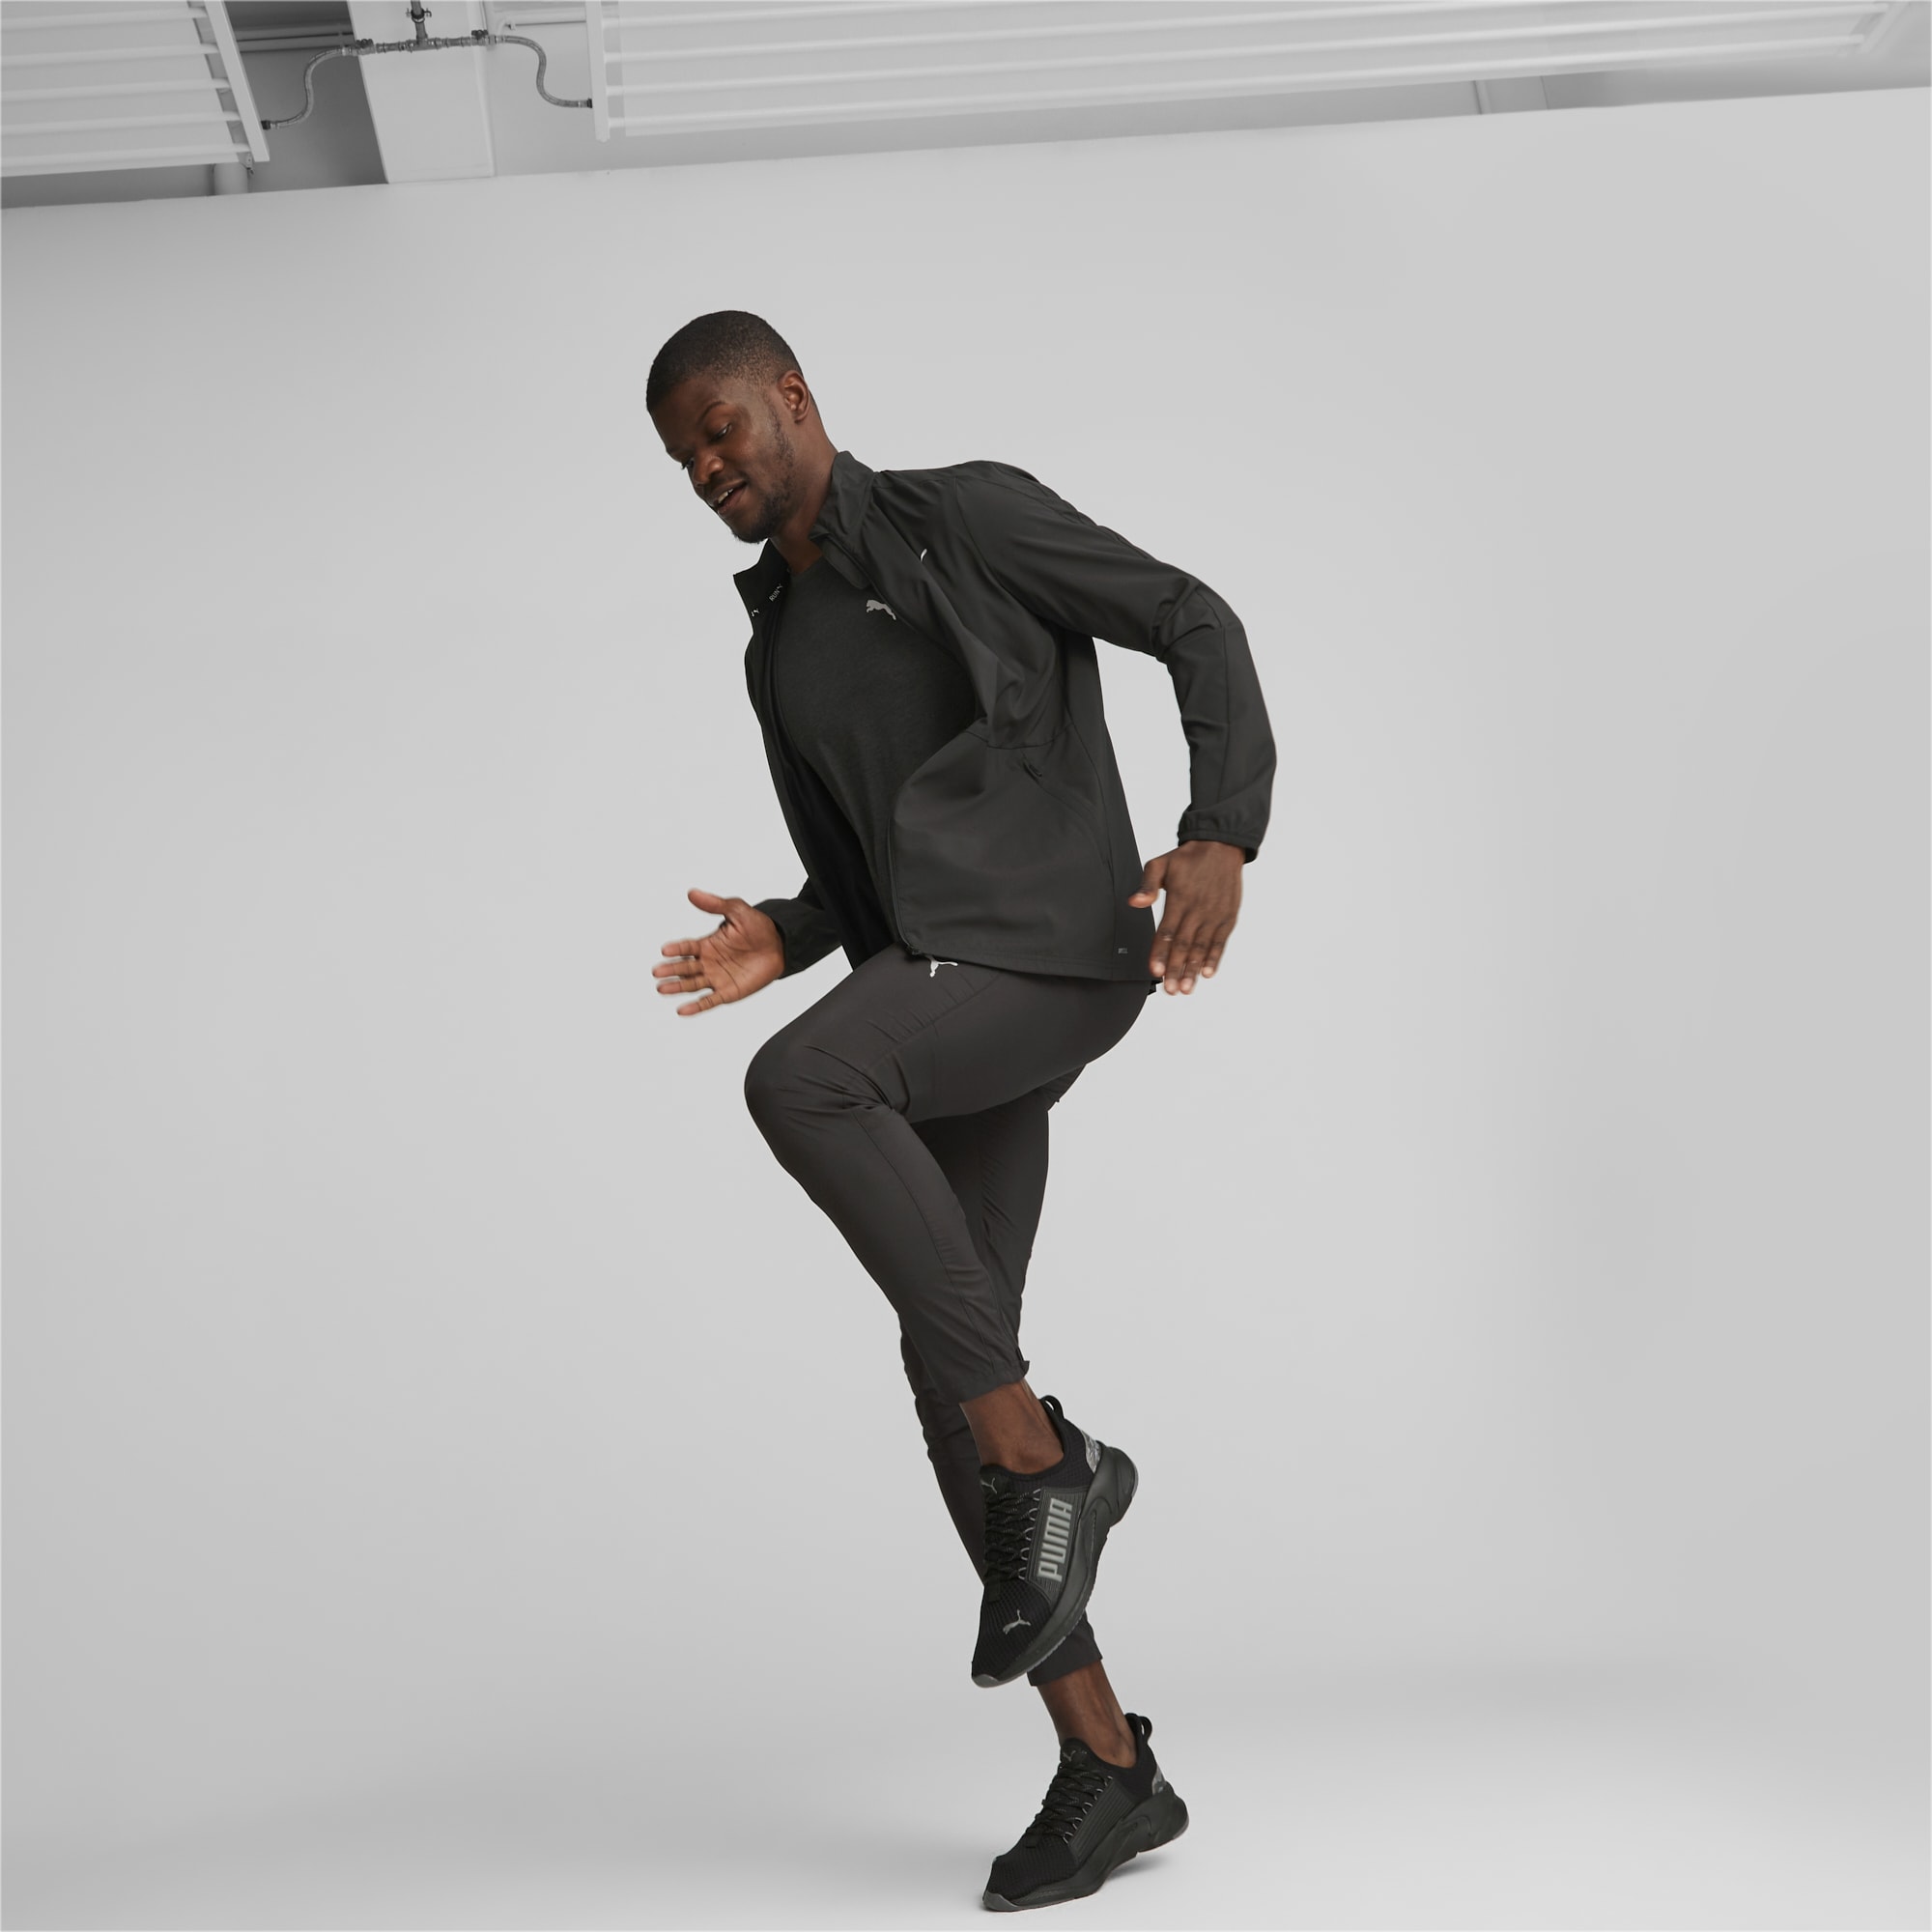 PUMA Run Favourite Tapered Running Pants Men, Black, Size XS, Clothing